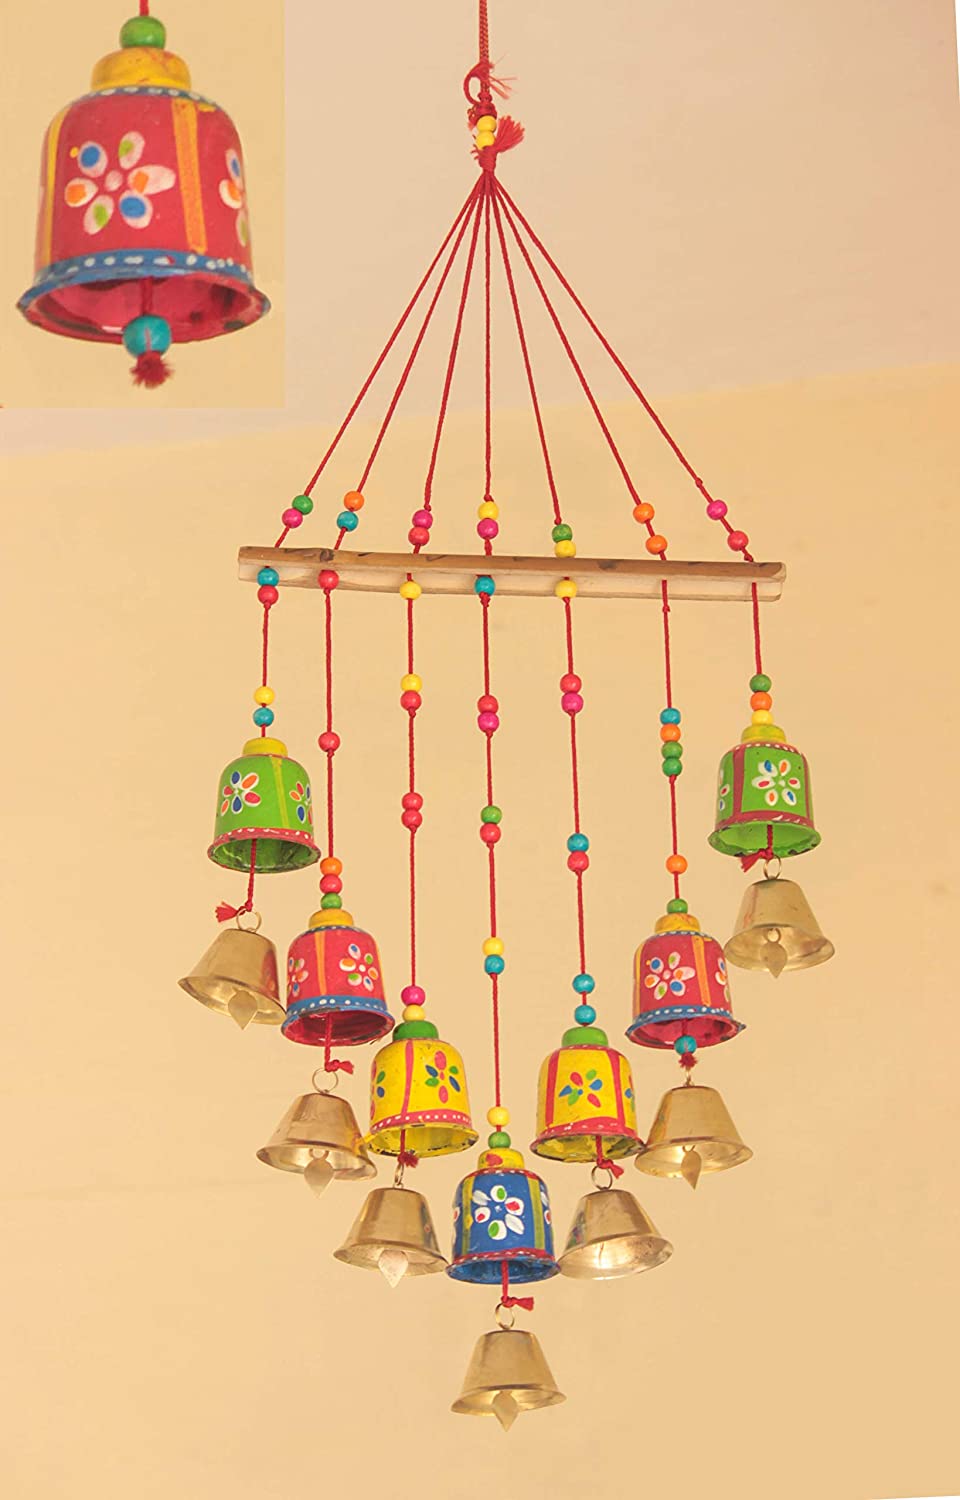 New Jaipur Handicraft Door 🚪 Hangings 💥 Toran Paper Mache New Jaipur Handicraft Wooden Bell 🔔 Toran set Pack Of 1 / Door Hanging 🔔🎐 Toran / Hanging Toran Set / Decorative Hangings For Home 🏠